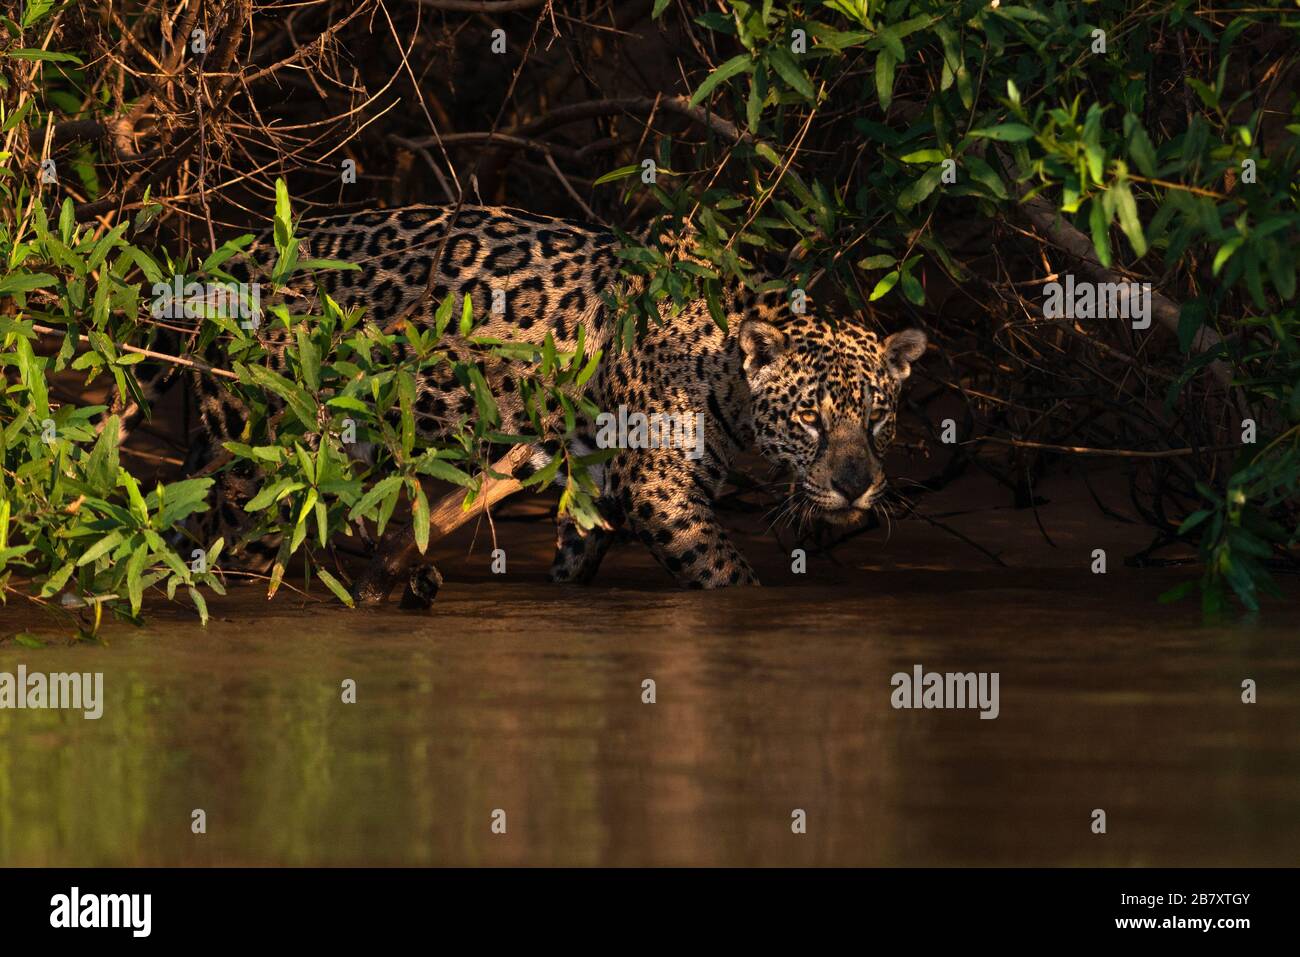 A Jaguar (Panthera onca) emerges from the vegetation, Pantanal, Brazil. Stock Photo